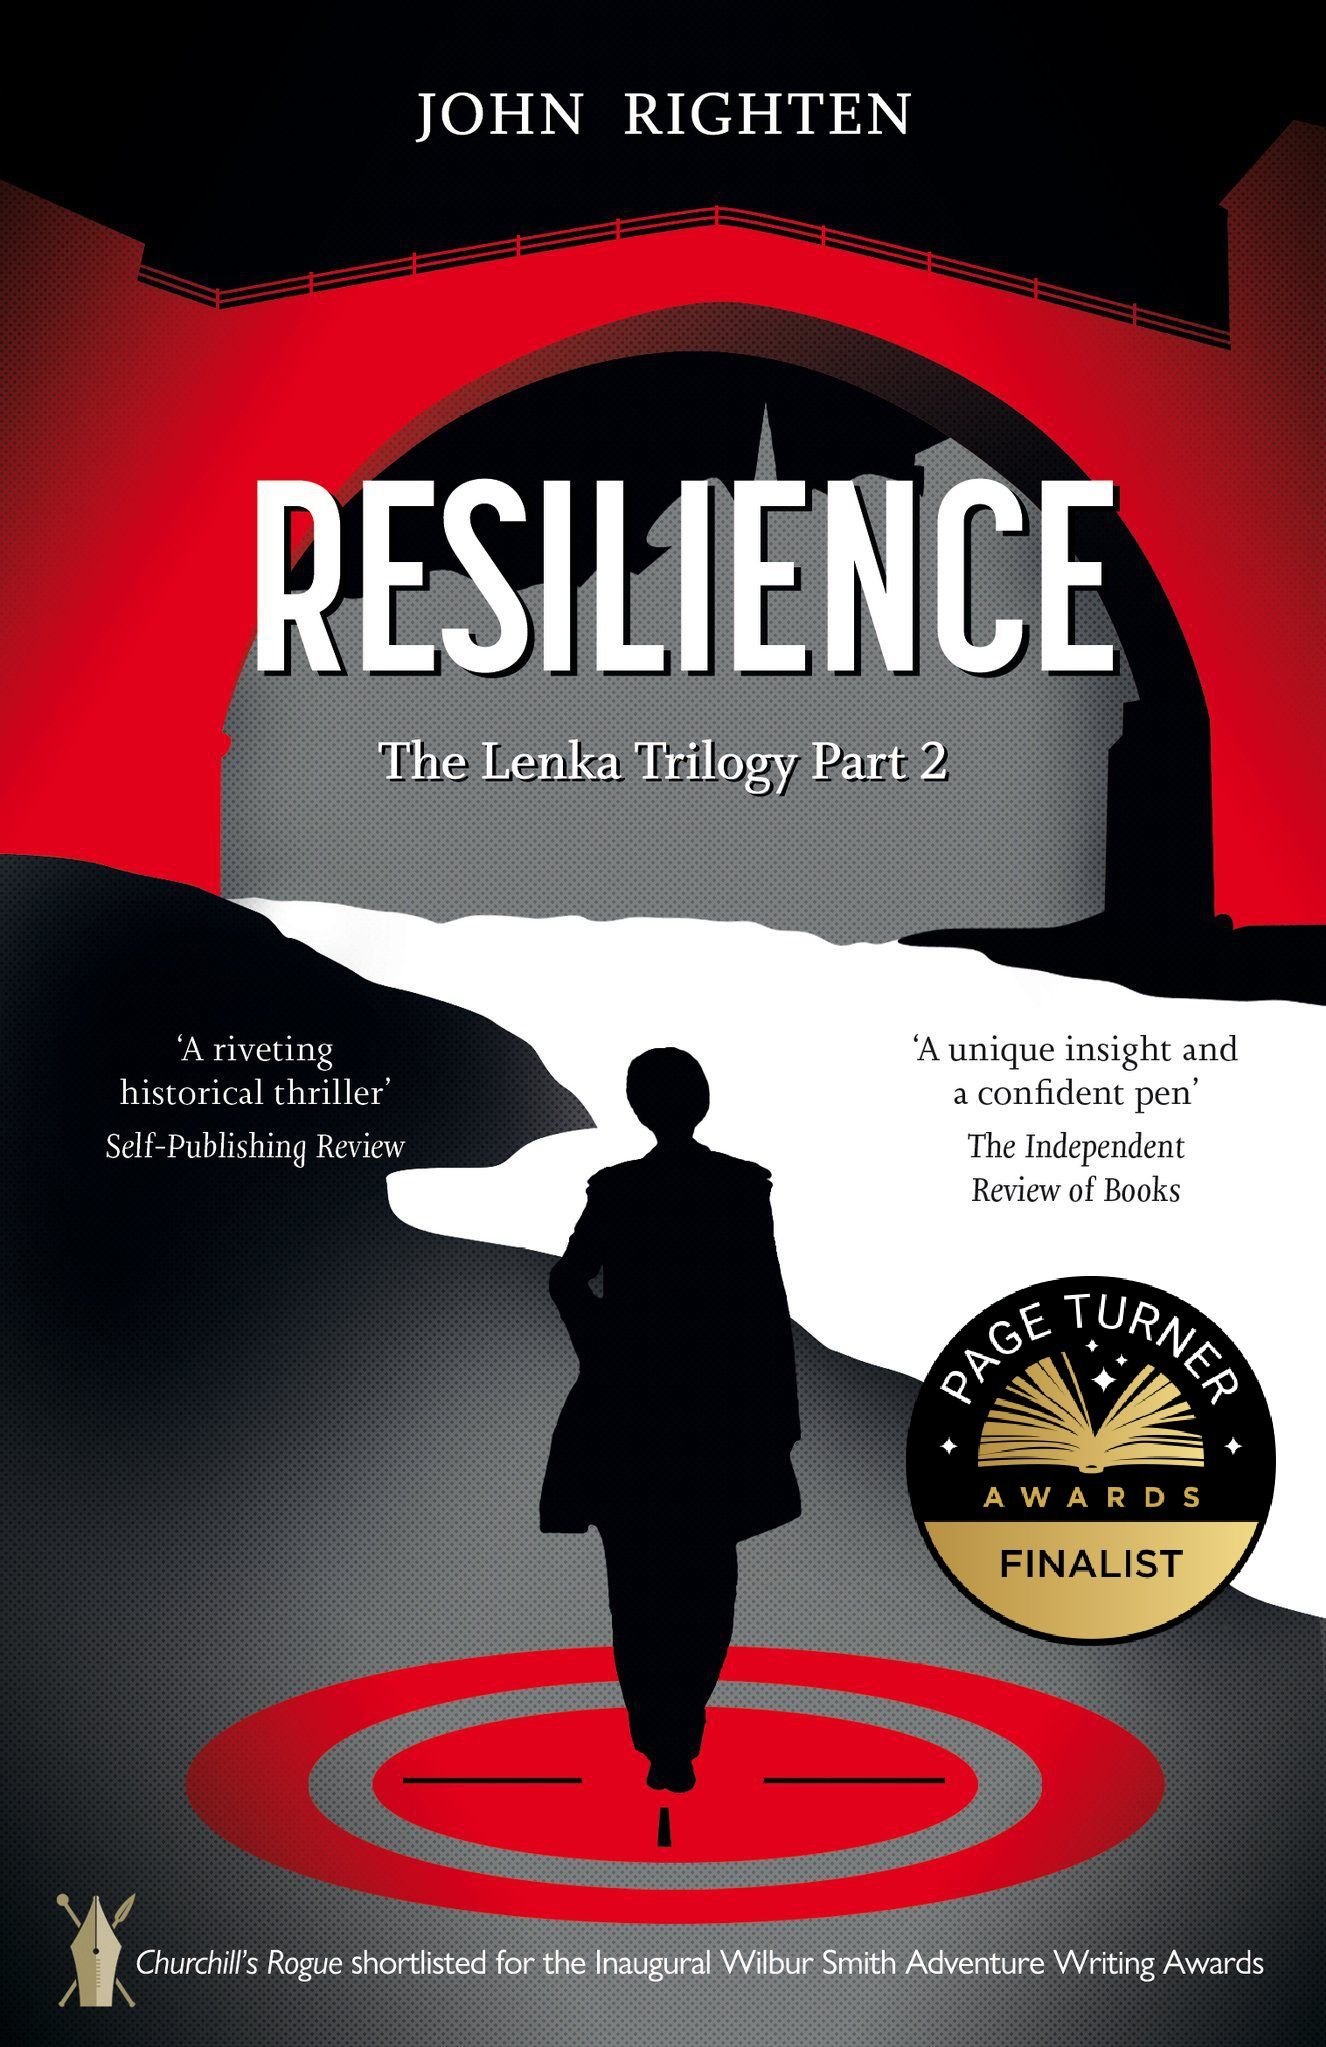 Resilience FINAL Kindle Page Turner Photo 22-02-2021, 11 28 46 (2).jpg